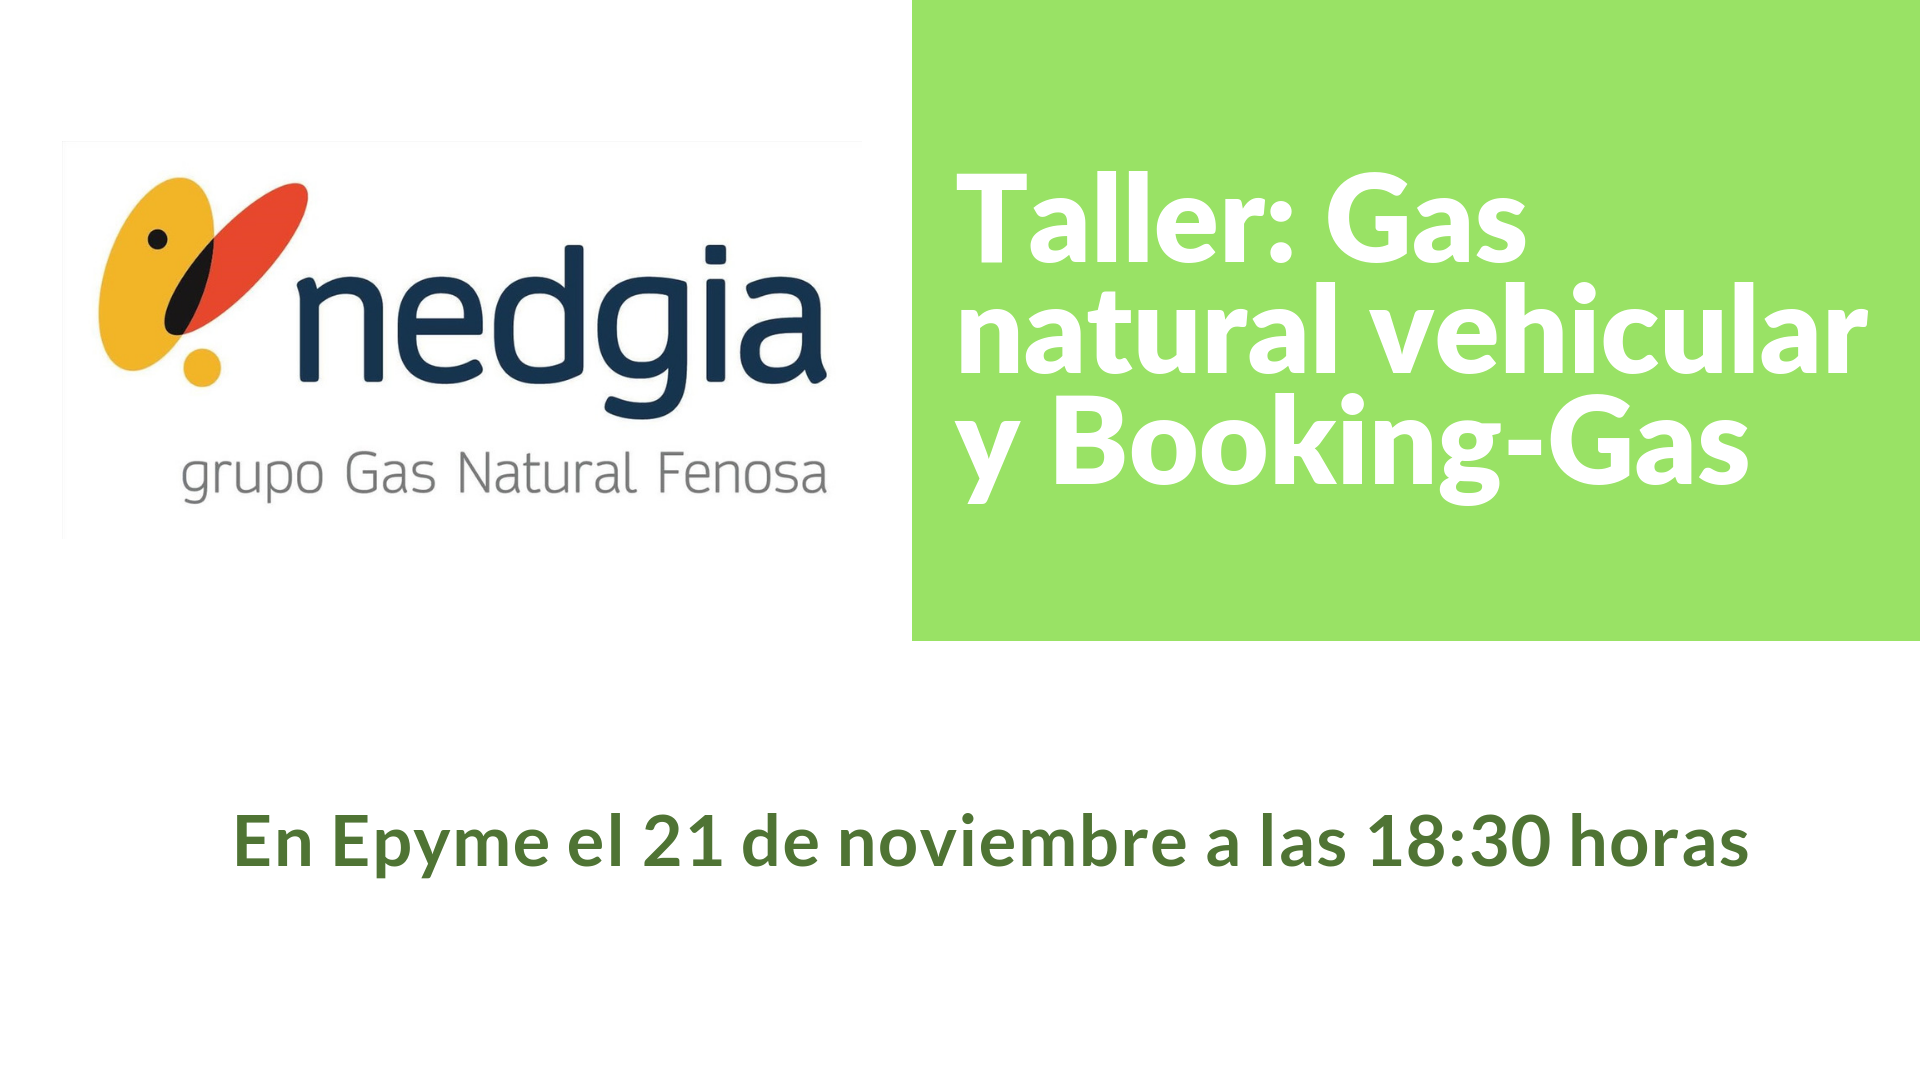 Jornada-Taller Nedgia: gas natural vehicular y Booking-Gas